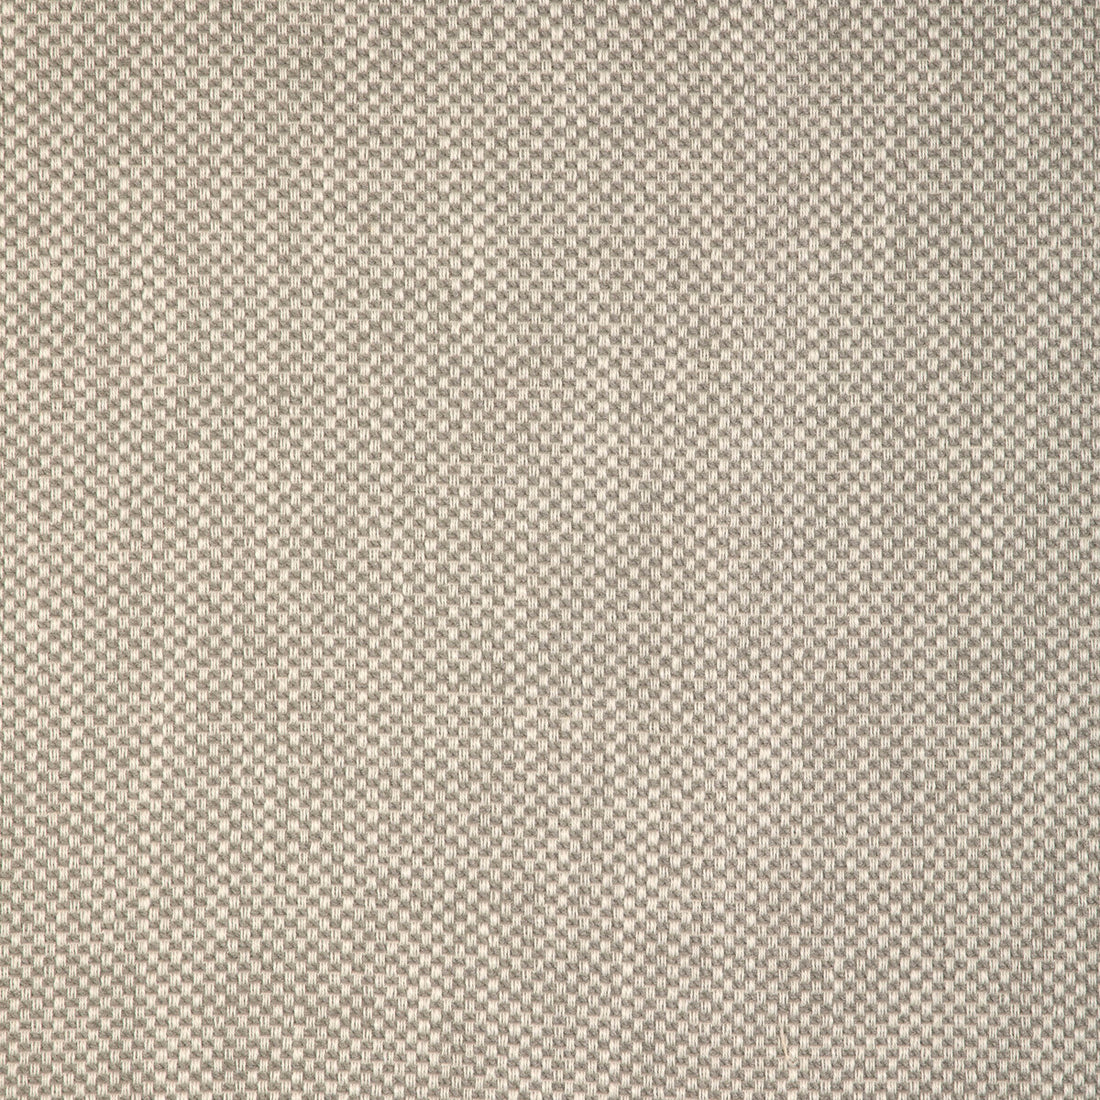 Kravet Smart fabric in 36999-106 color - pattern 36999.106.0 - by Kravet Smart in the Pavilion collection